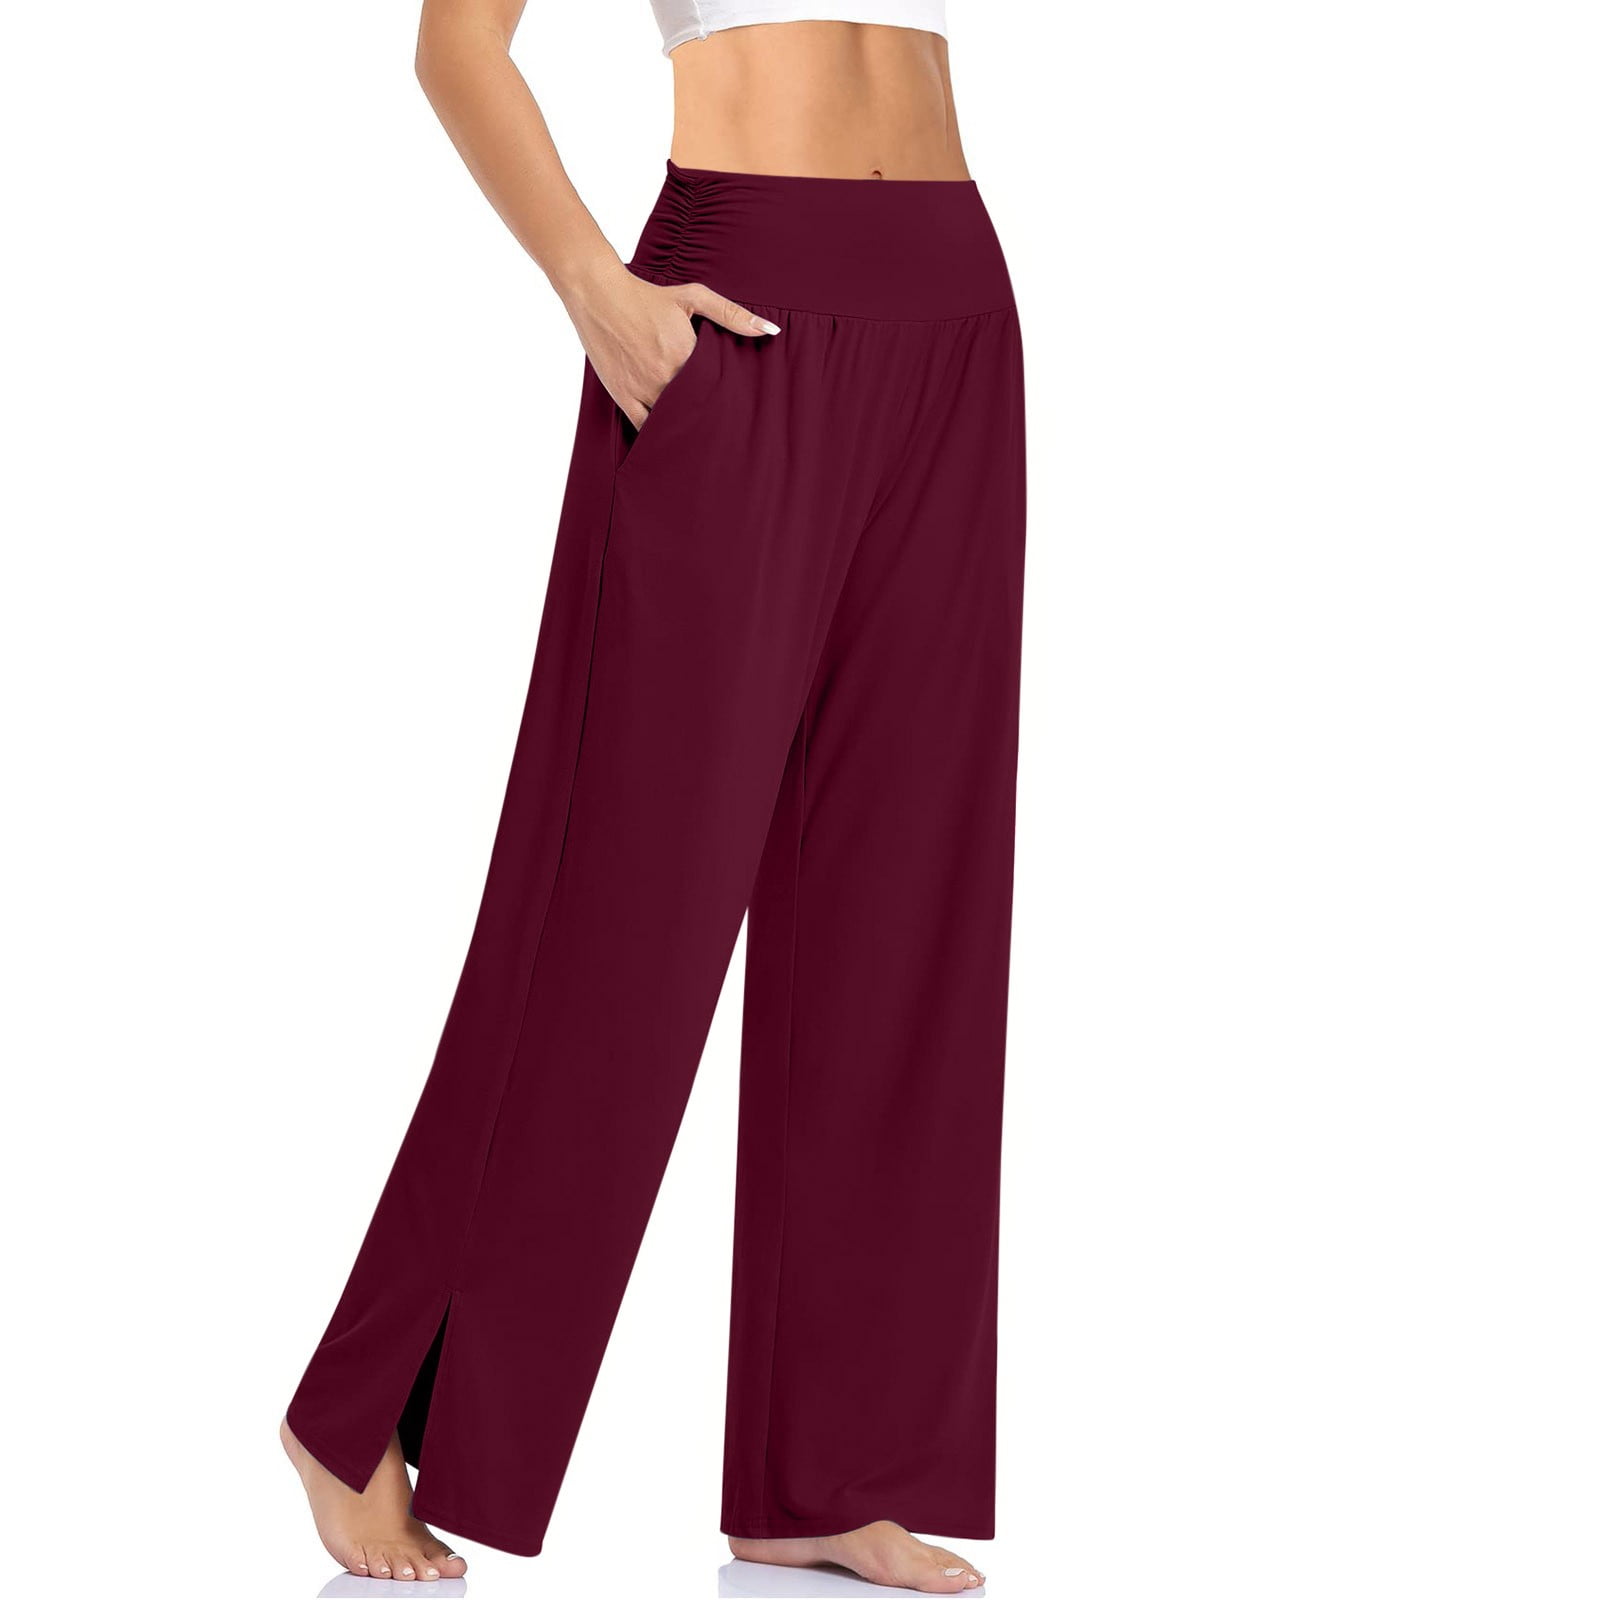 Inner Pocket Yoga Pants 4 Way Stretch Tummy Control Workout Running Pants, Long  Bootleg Flare Pants - Coffee - Walmart.com